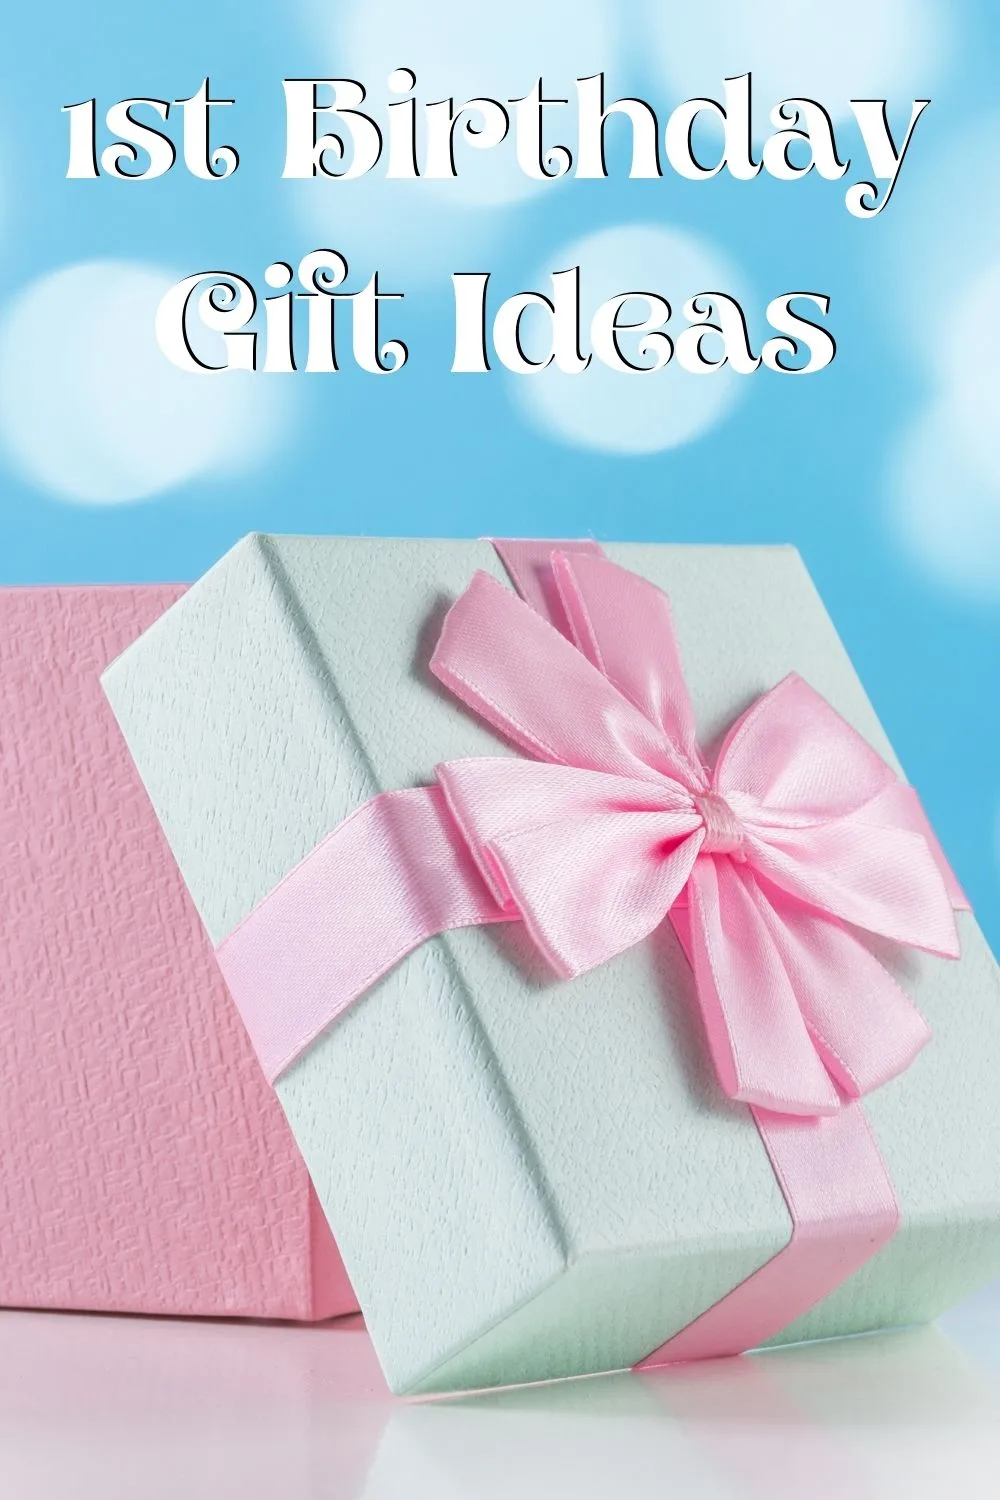 1st birthday gift ideas